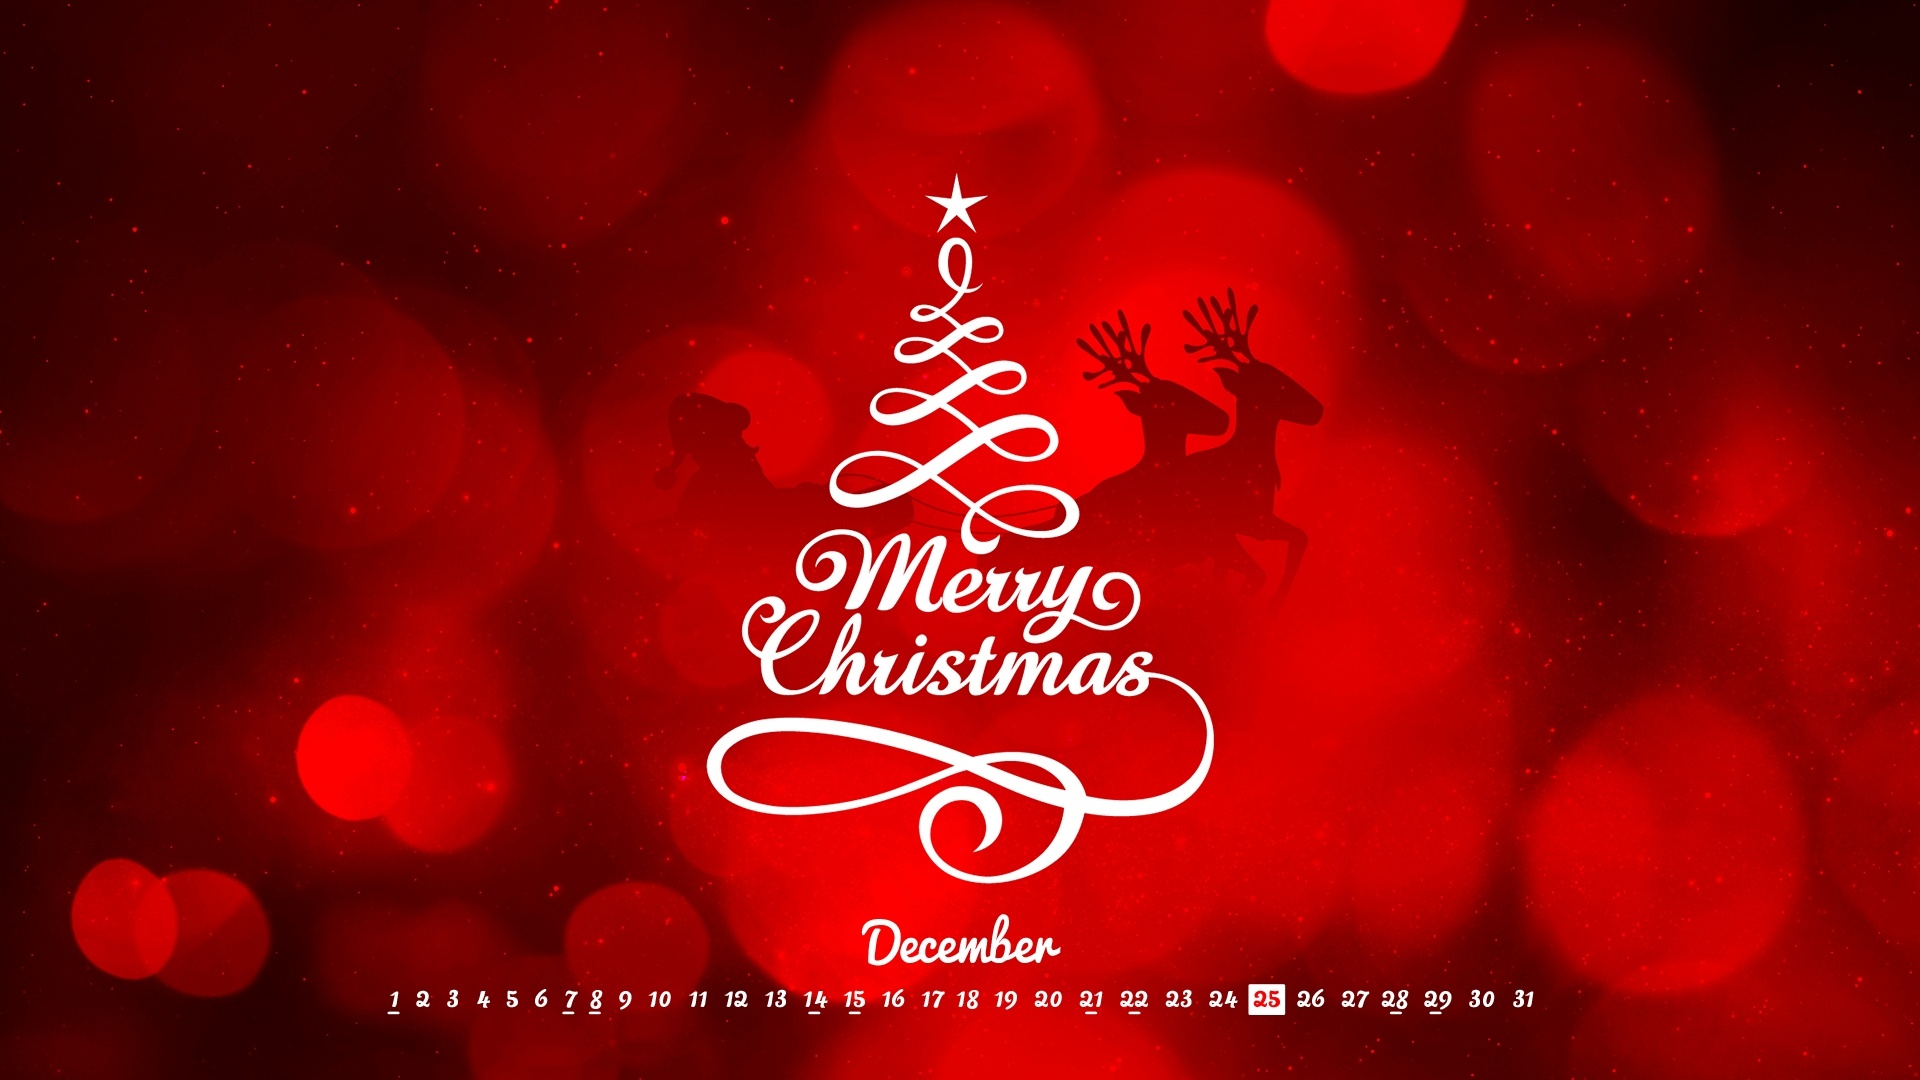 Christmas Love December 2013   1920 X 1080   Download   Close